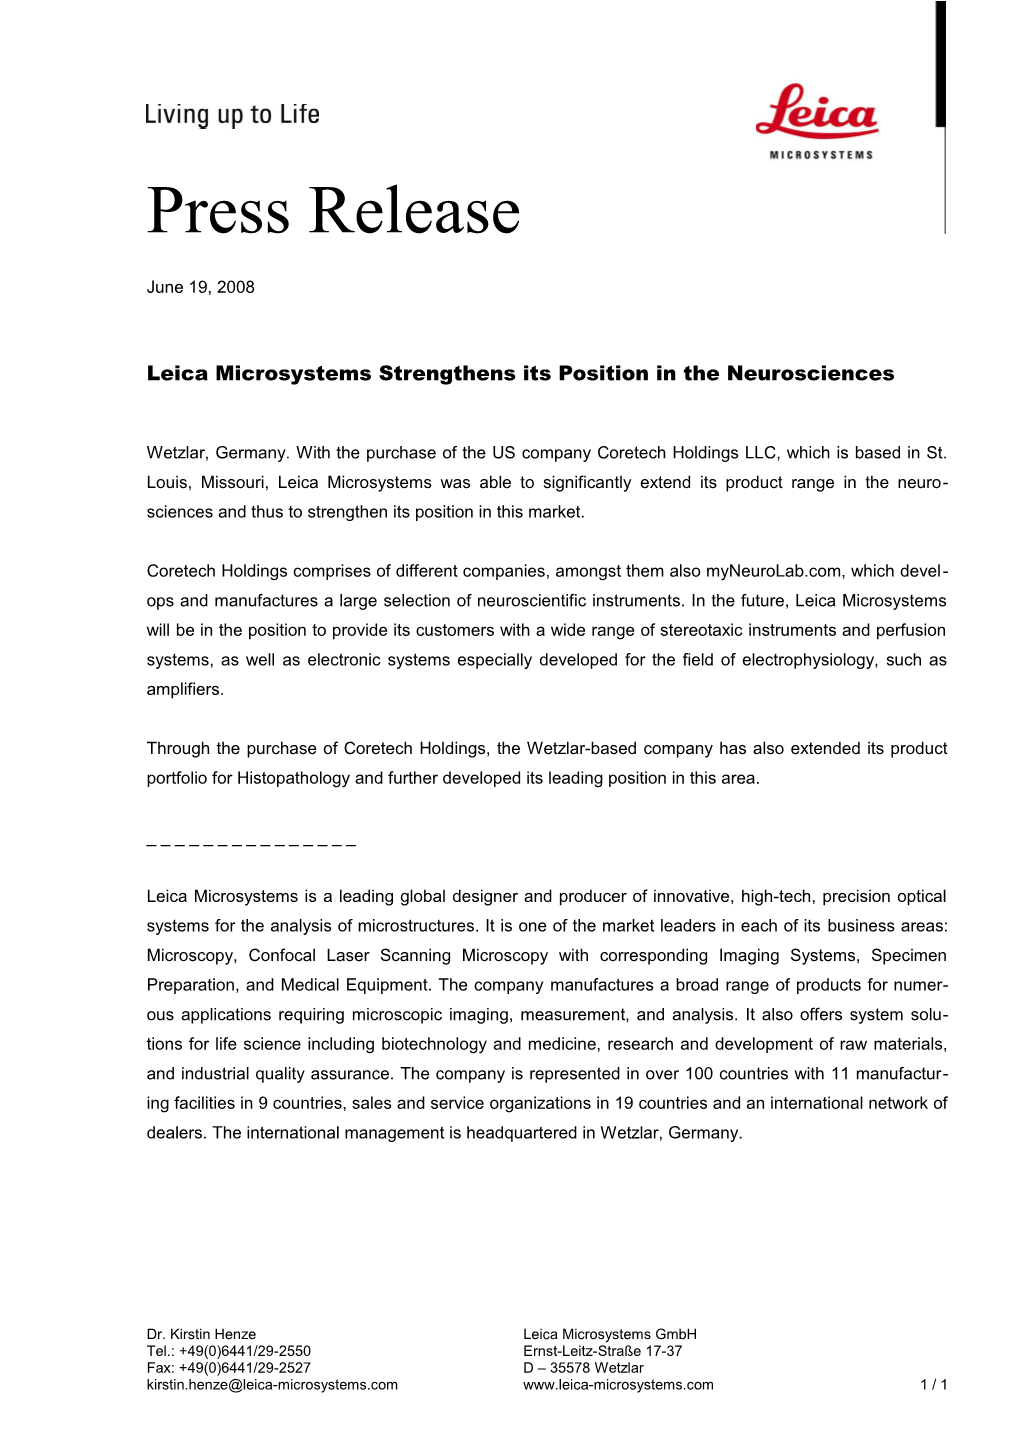 Leica Microsystems Press Release s4